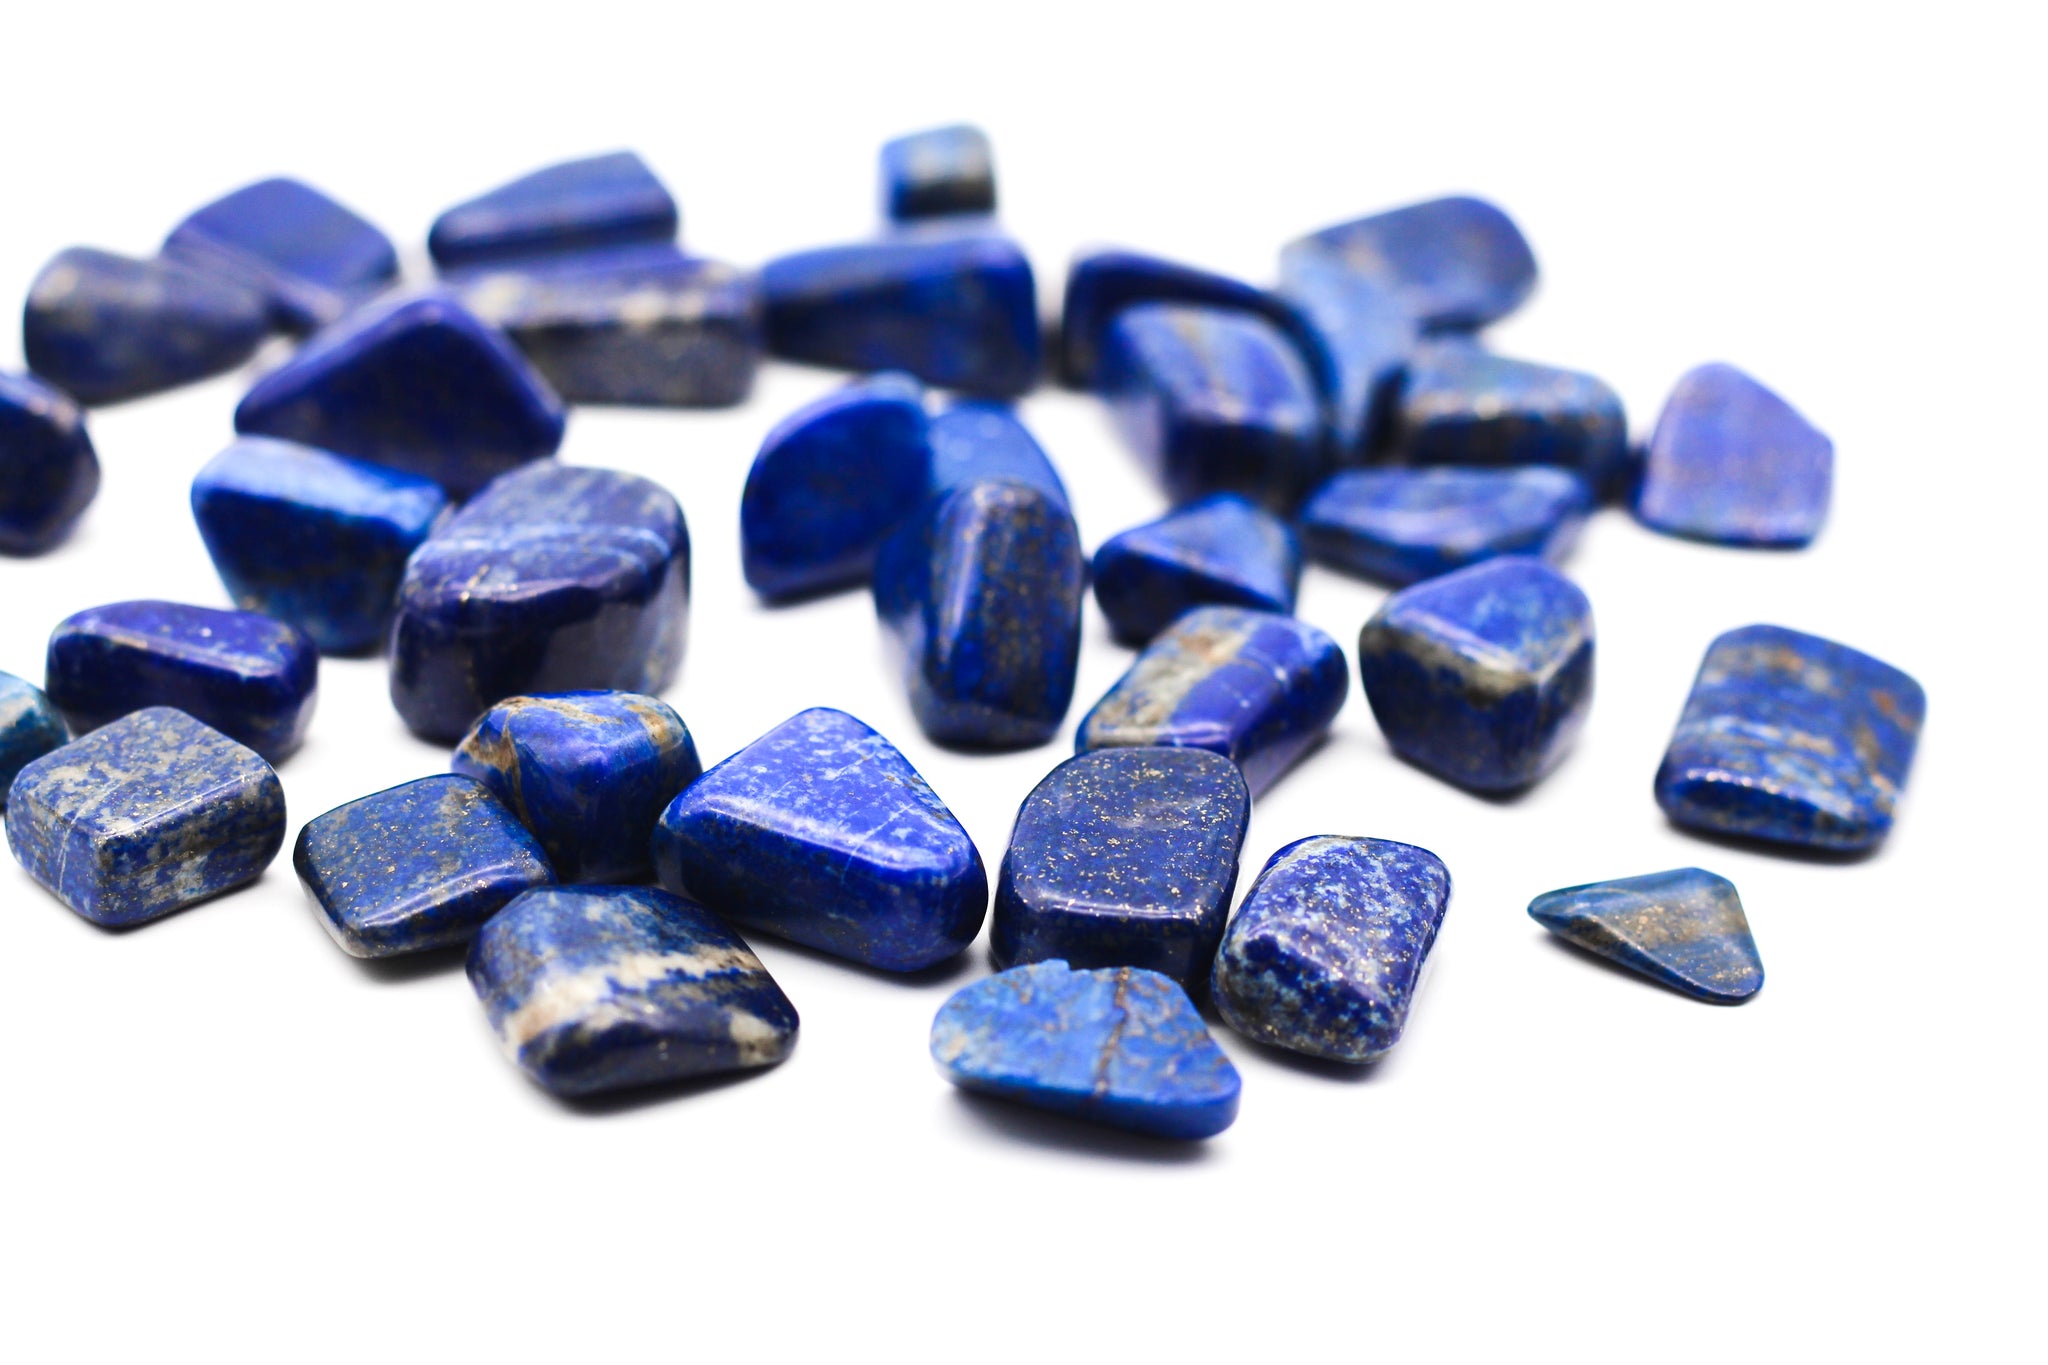 Cobalto Calcite Tumbled Stone - Grade B